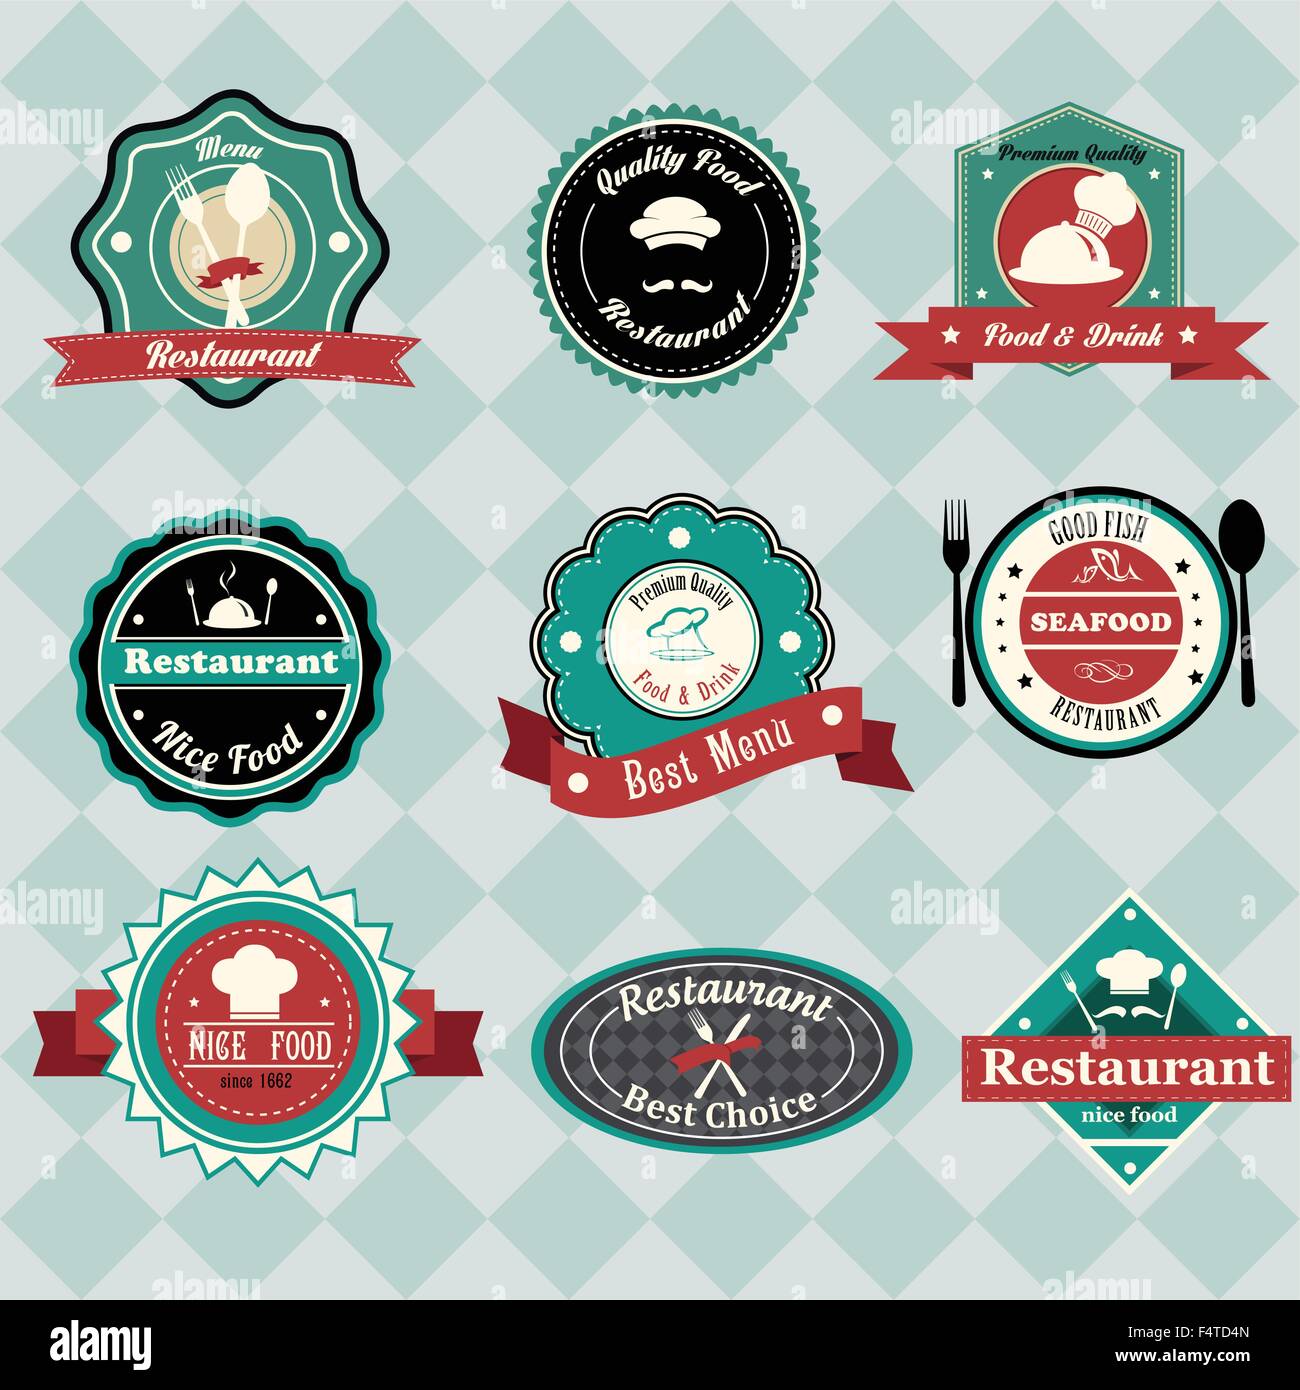 A vector illustration of vintage restaurant label designs Stock Vector